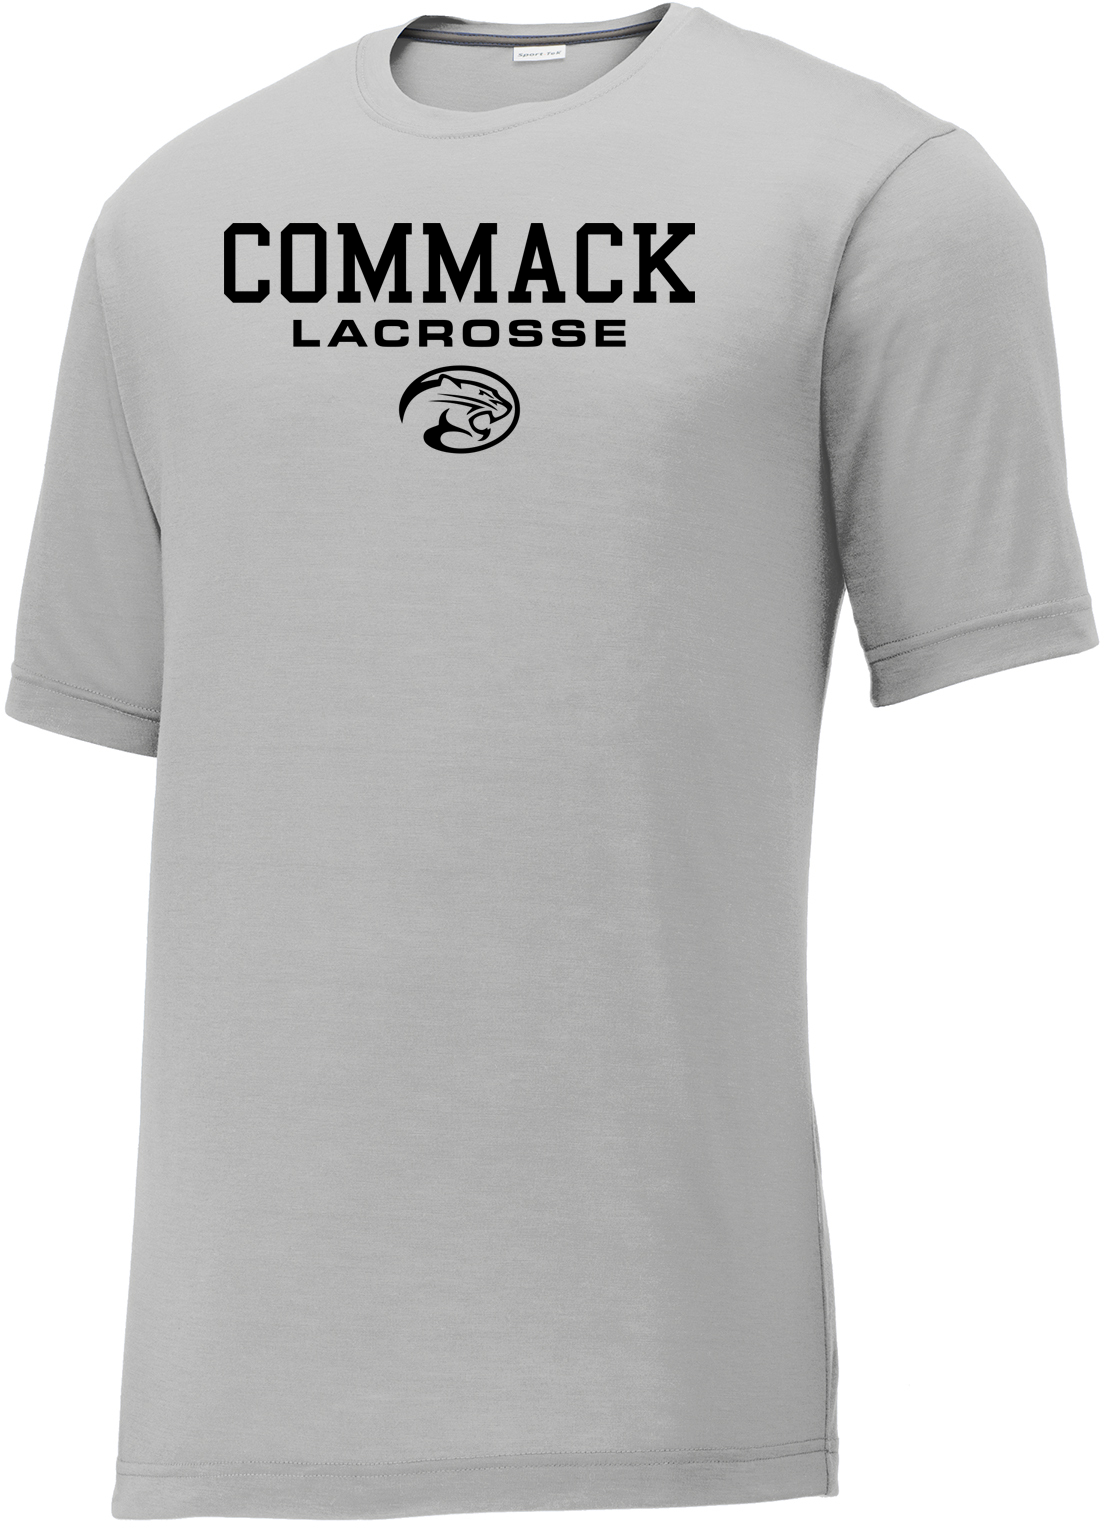 Commack Youth Lacrosse Men's Silver CottonTouch Performance T-Shirt